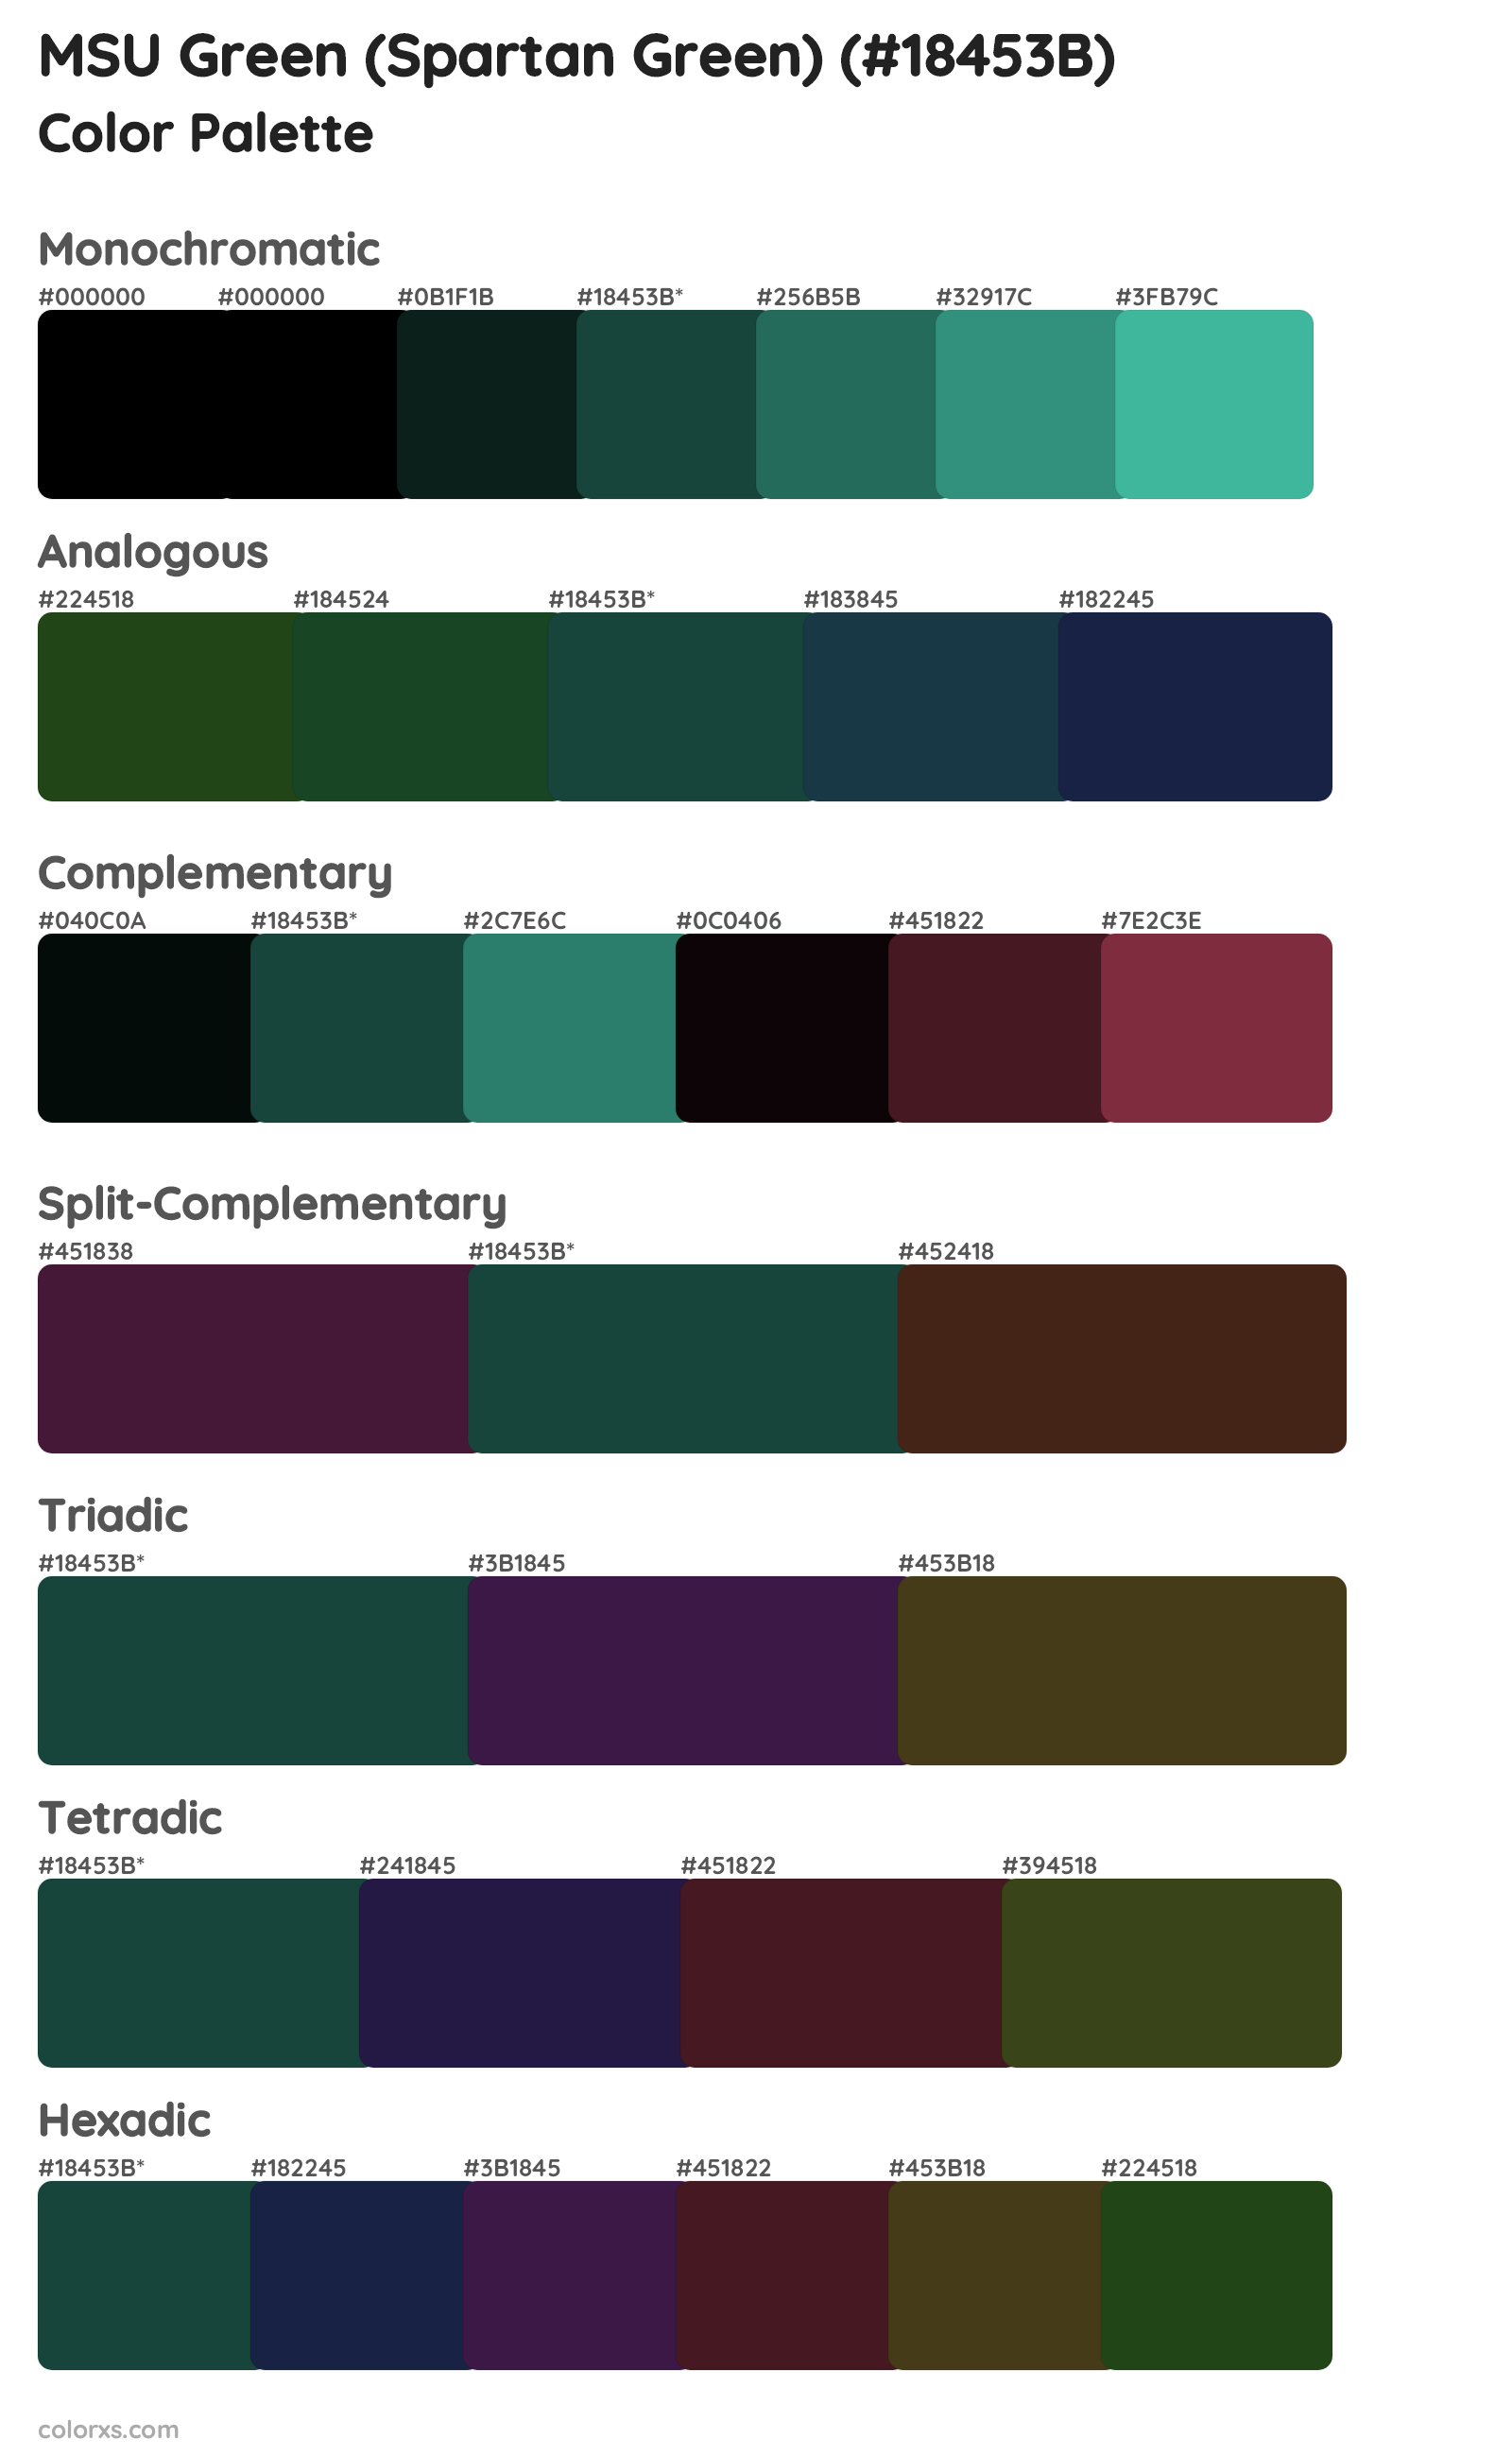 MSU Green (Spartan Green) Color Scheme Palettes